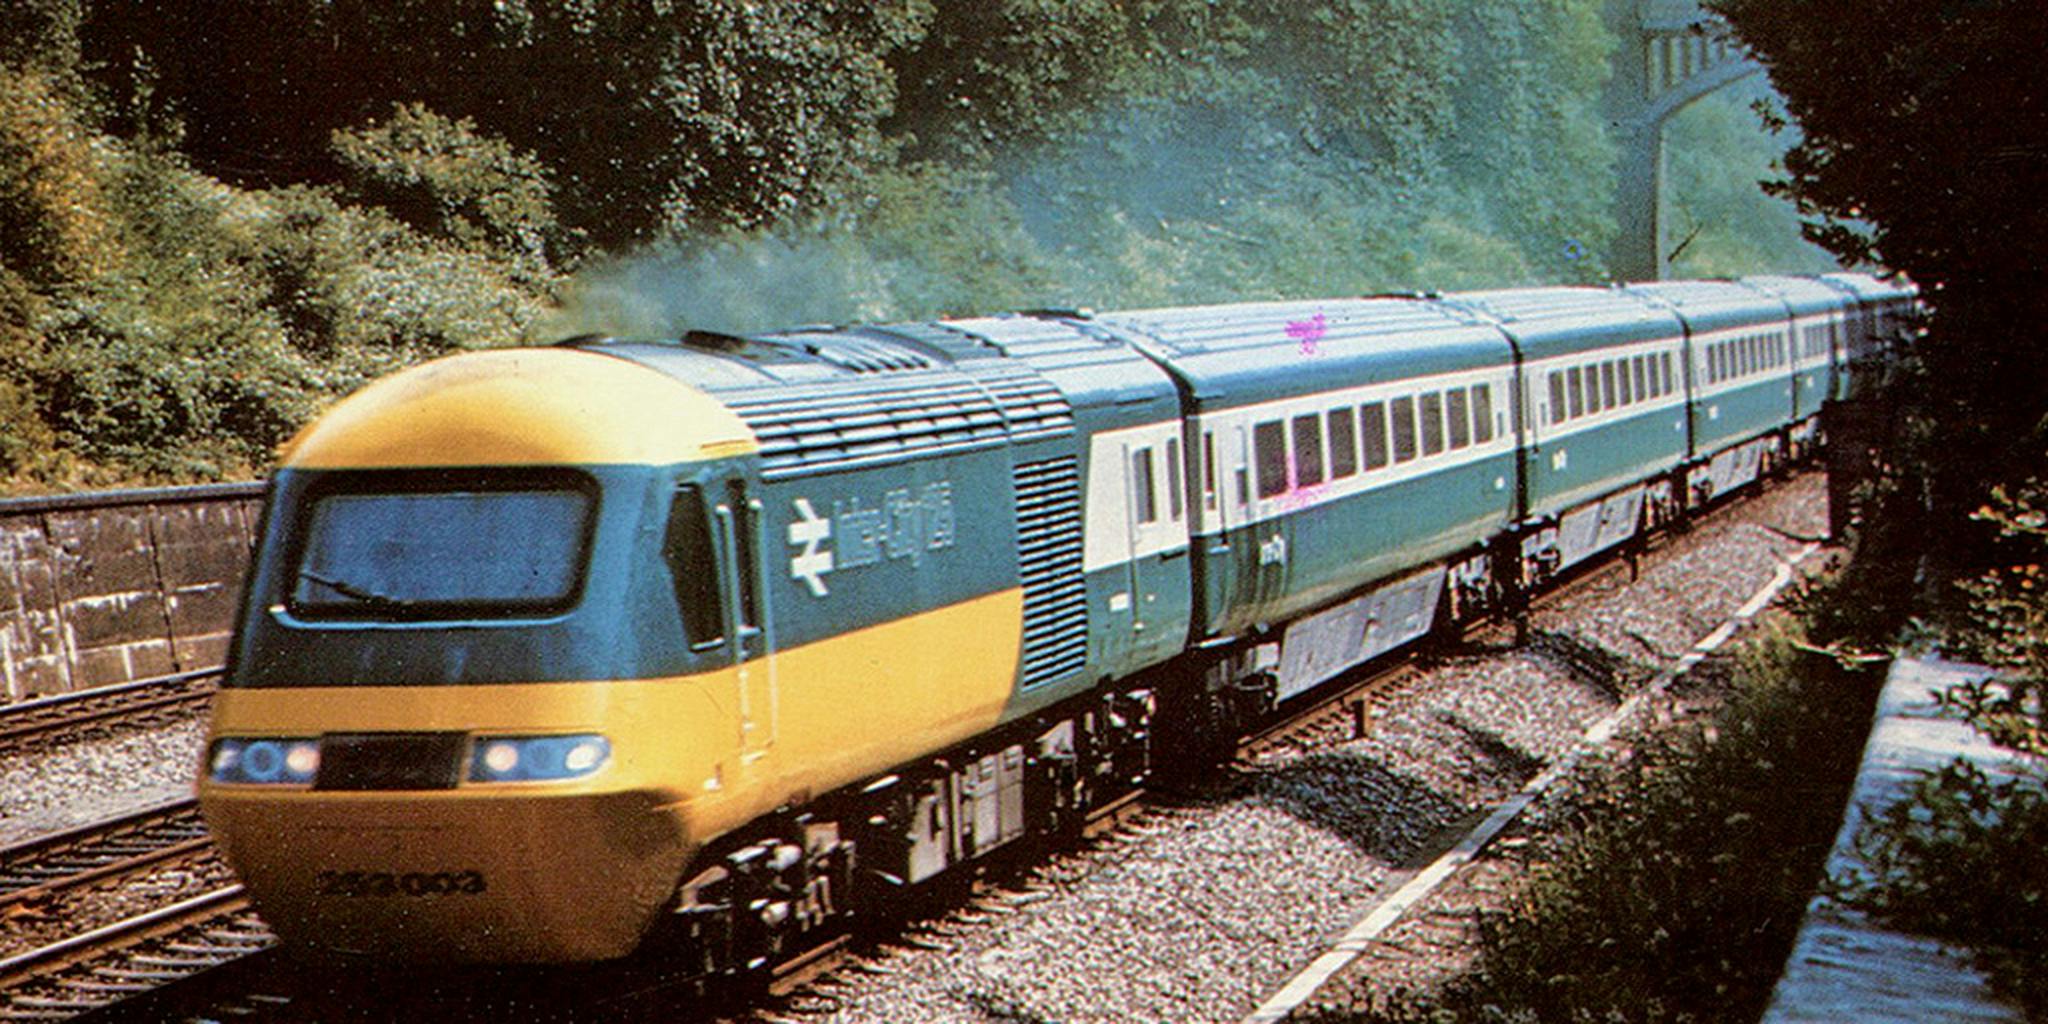 Inter city. Intercity Train 125. Intercity 125 1987 год. British Rail Intercity. Бритиш Реил Интер Сити 125.